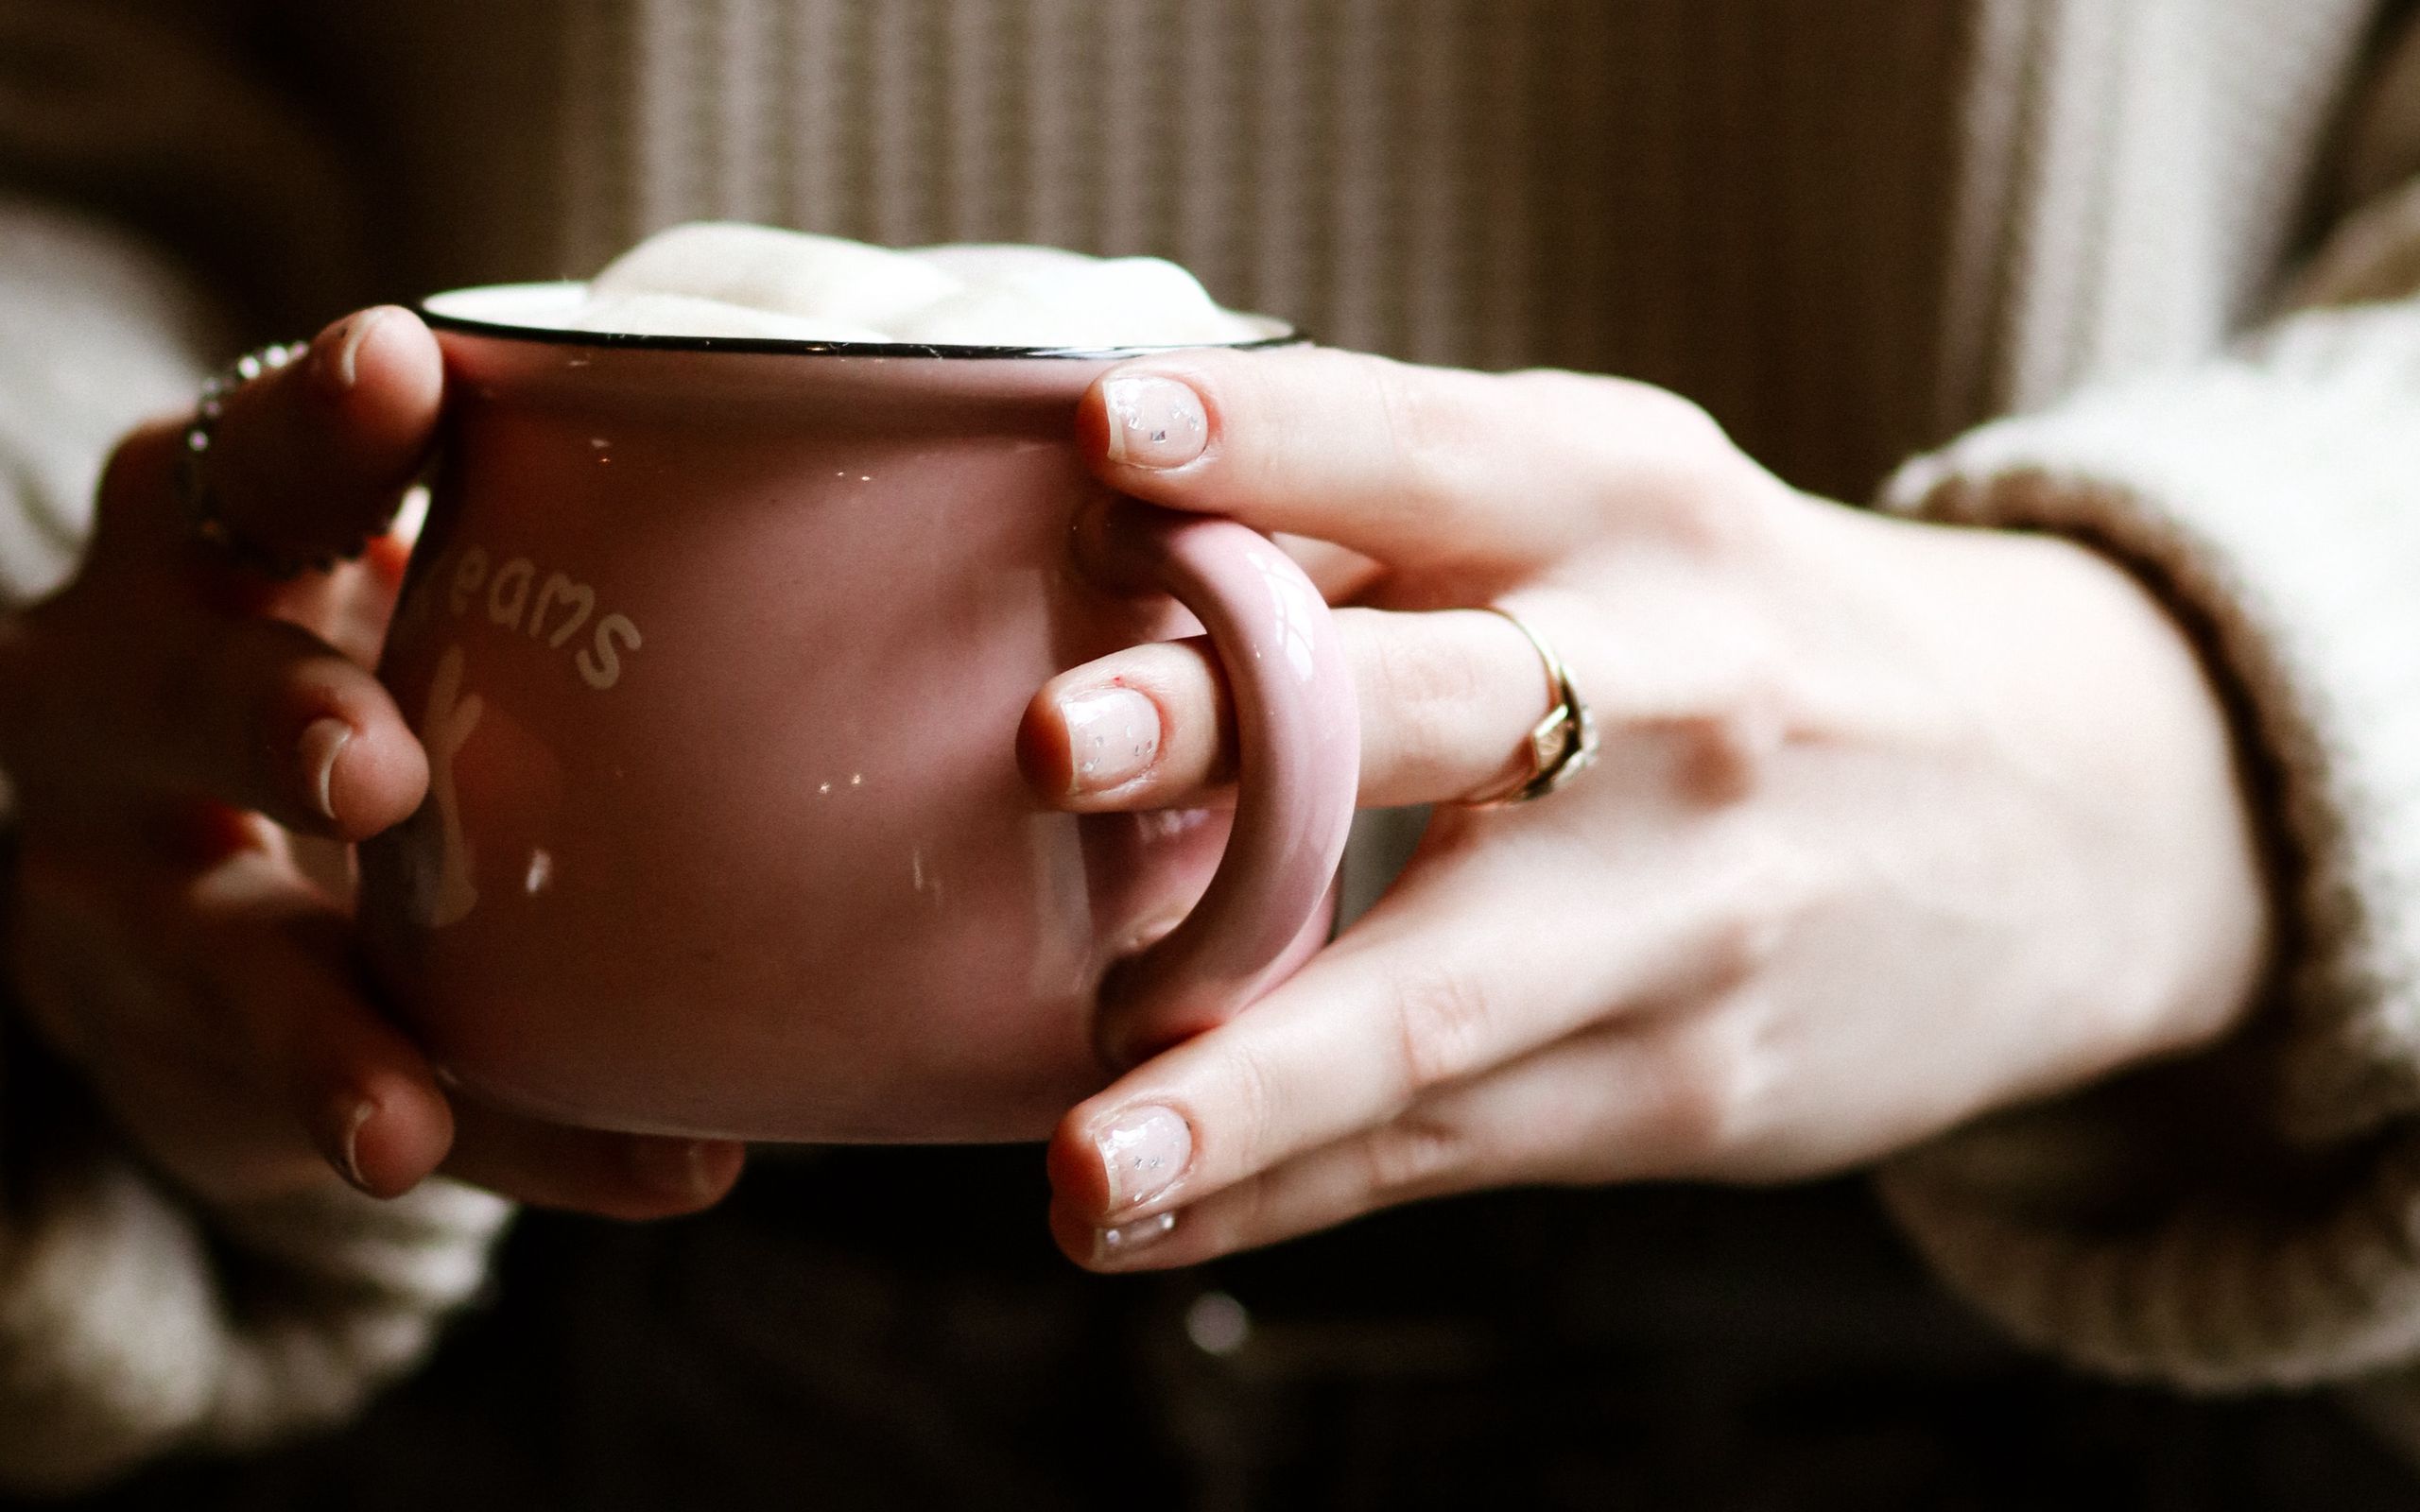 картинки руки с чашкой чая